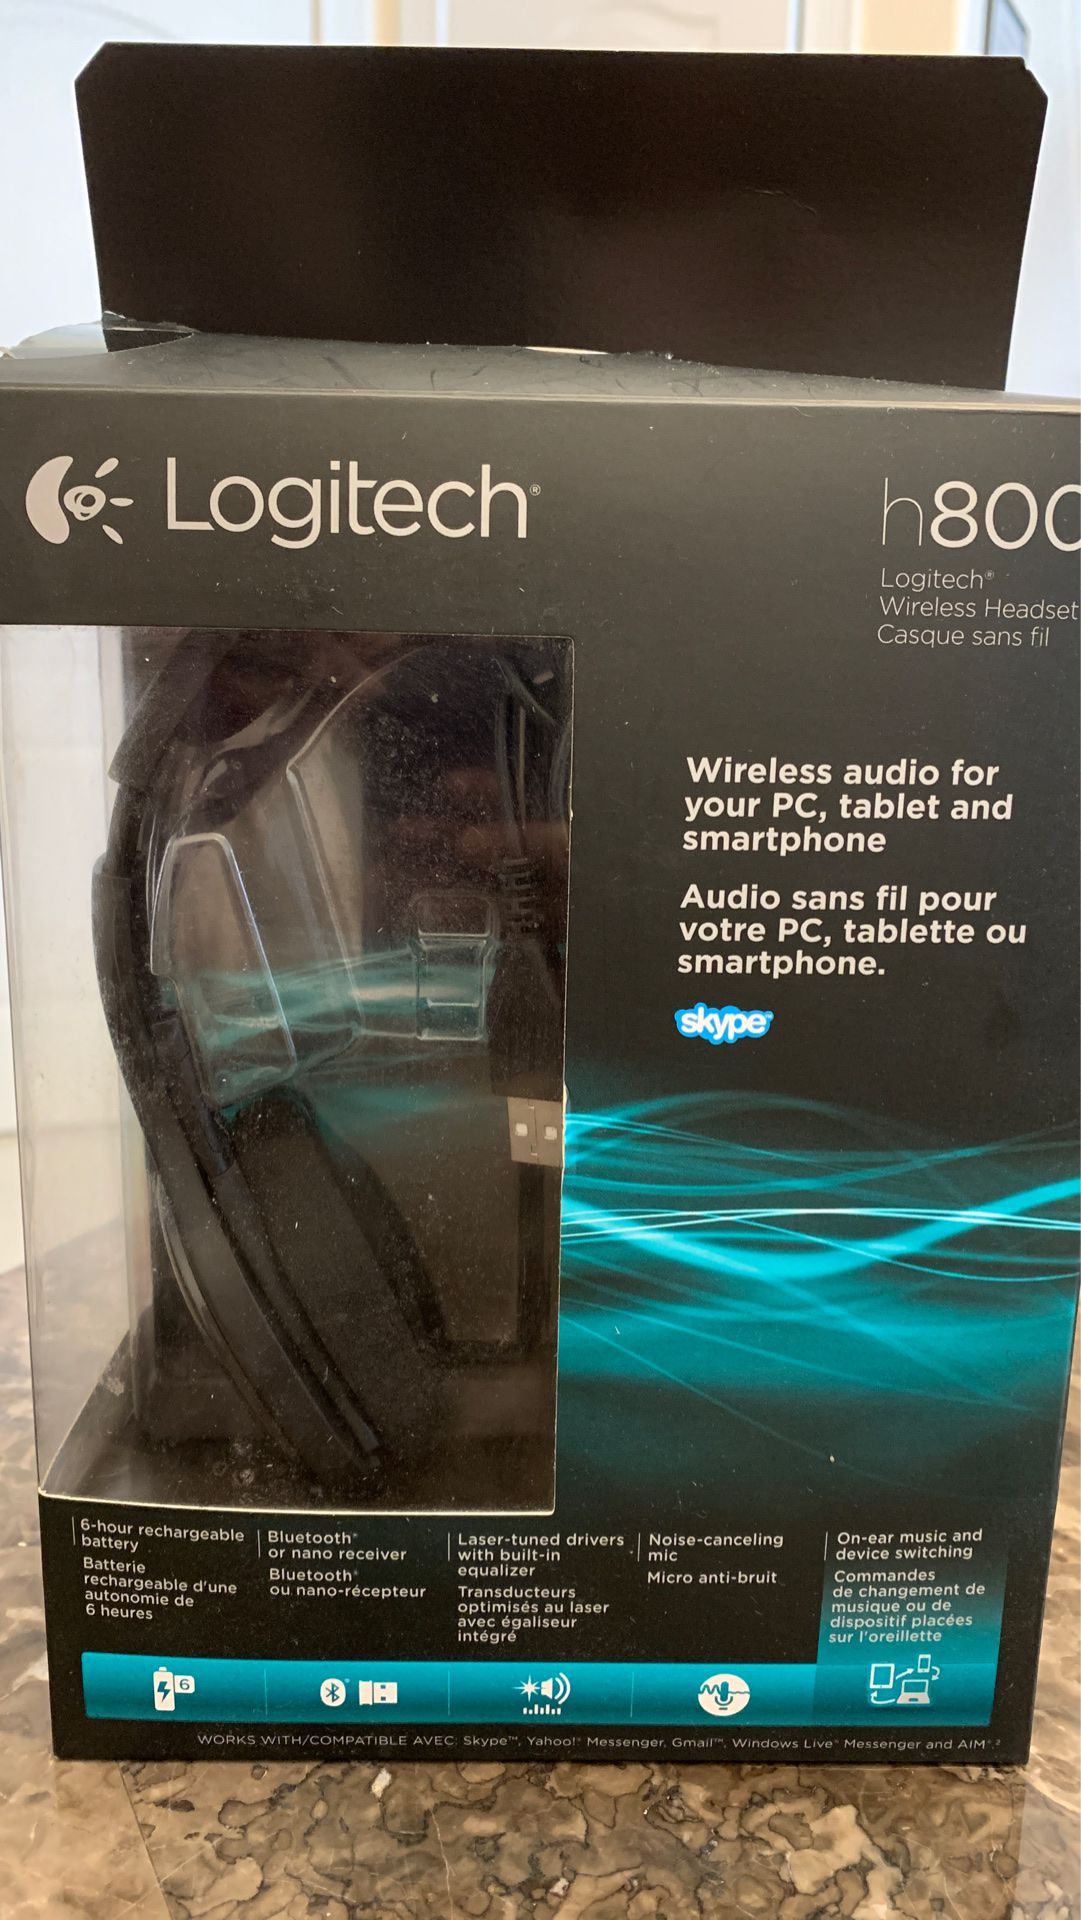 Logitech h800 wireless audio headset